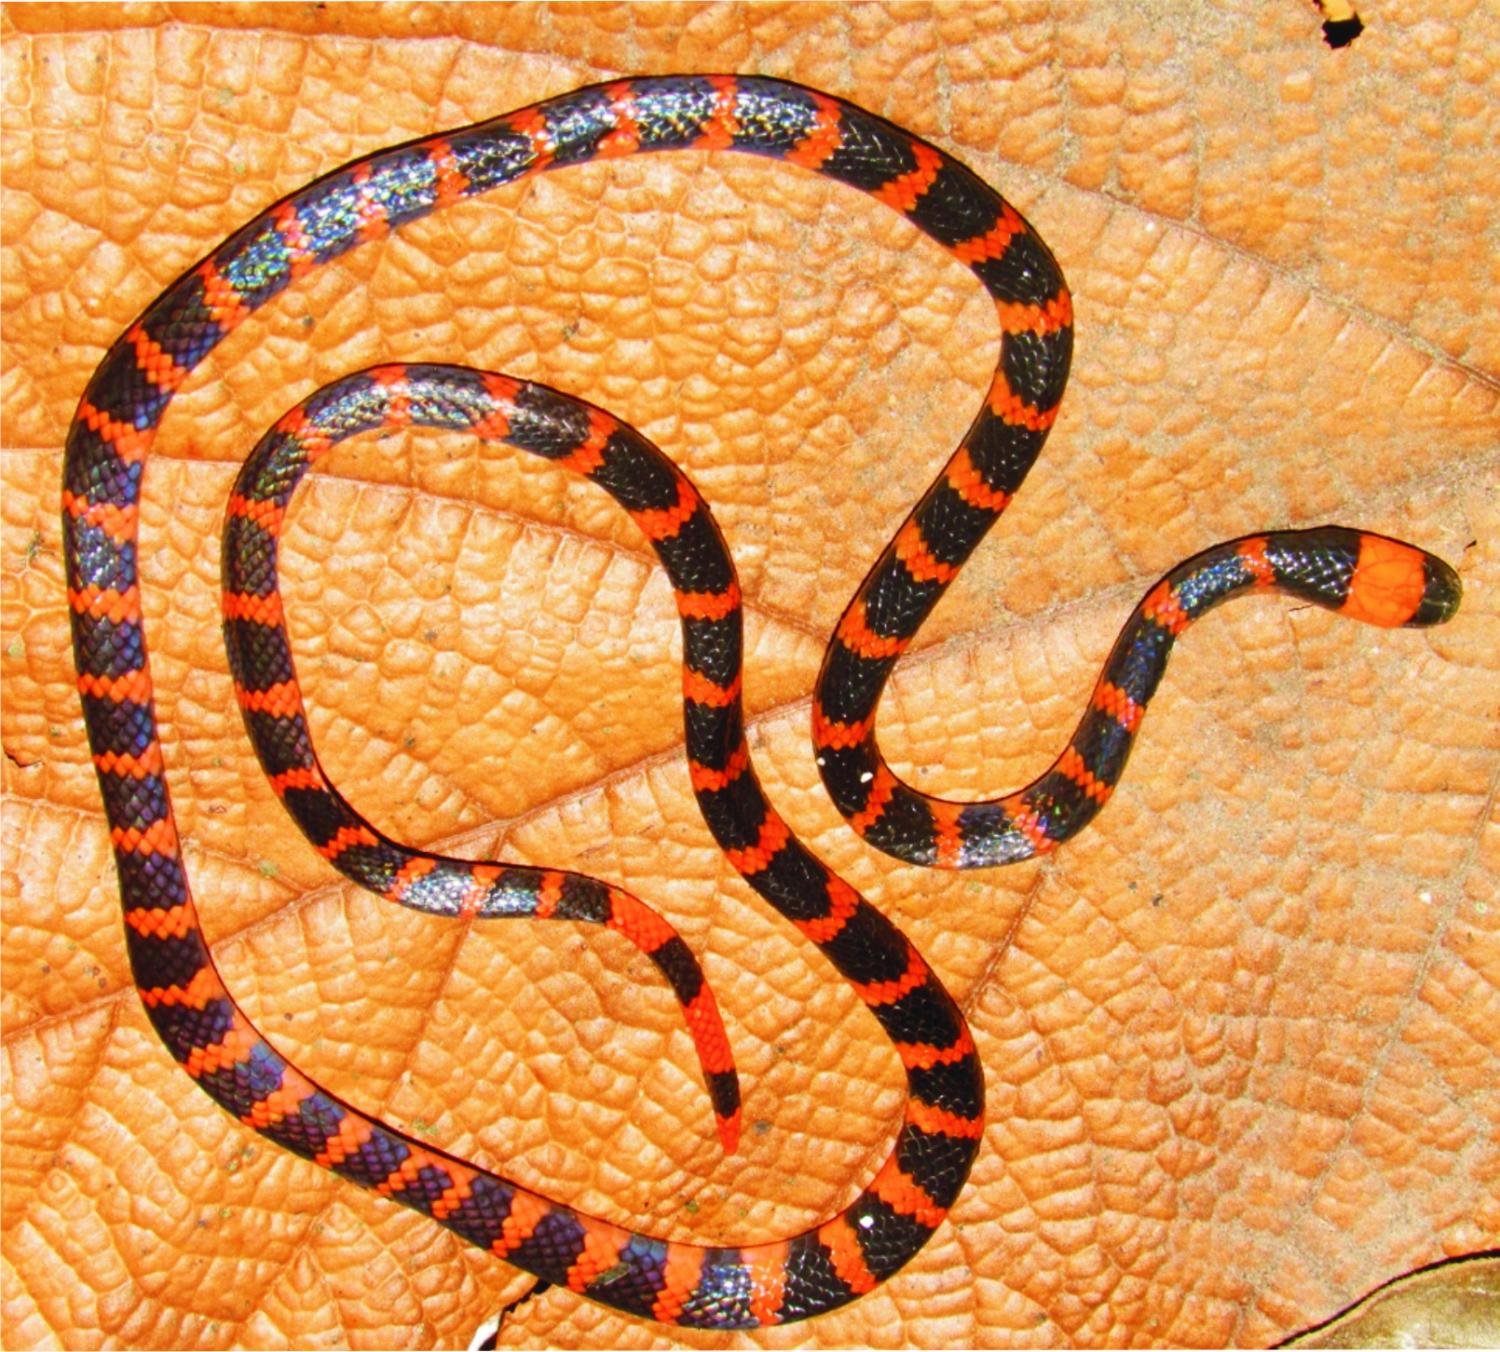 Змея семейства аспидовых